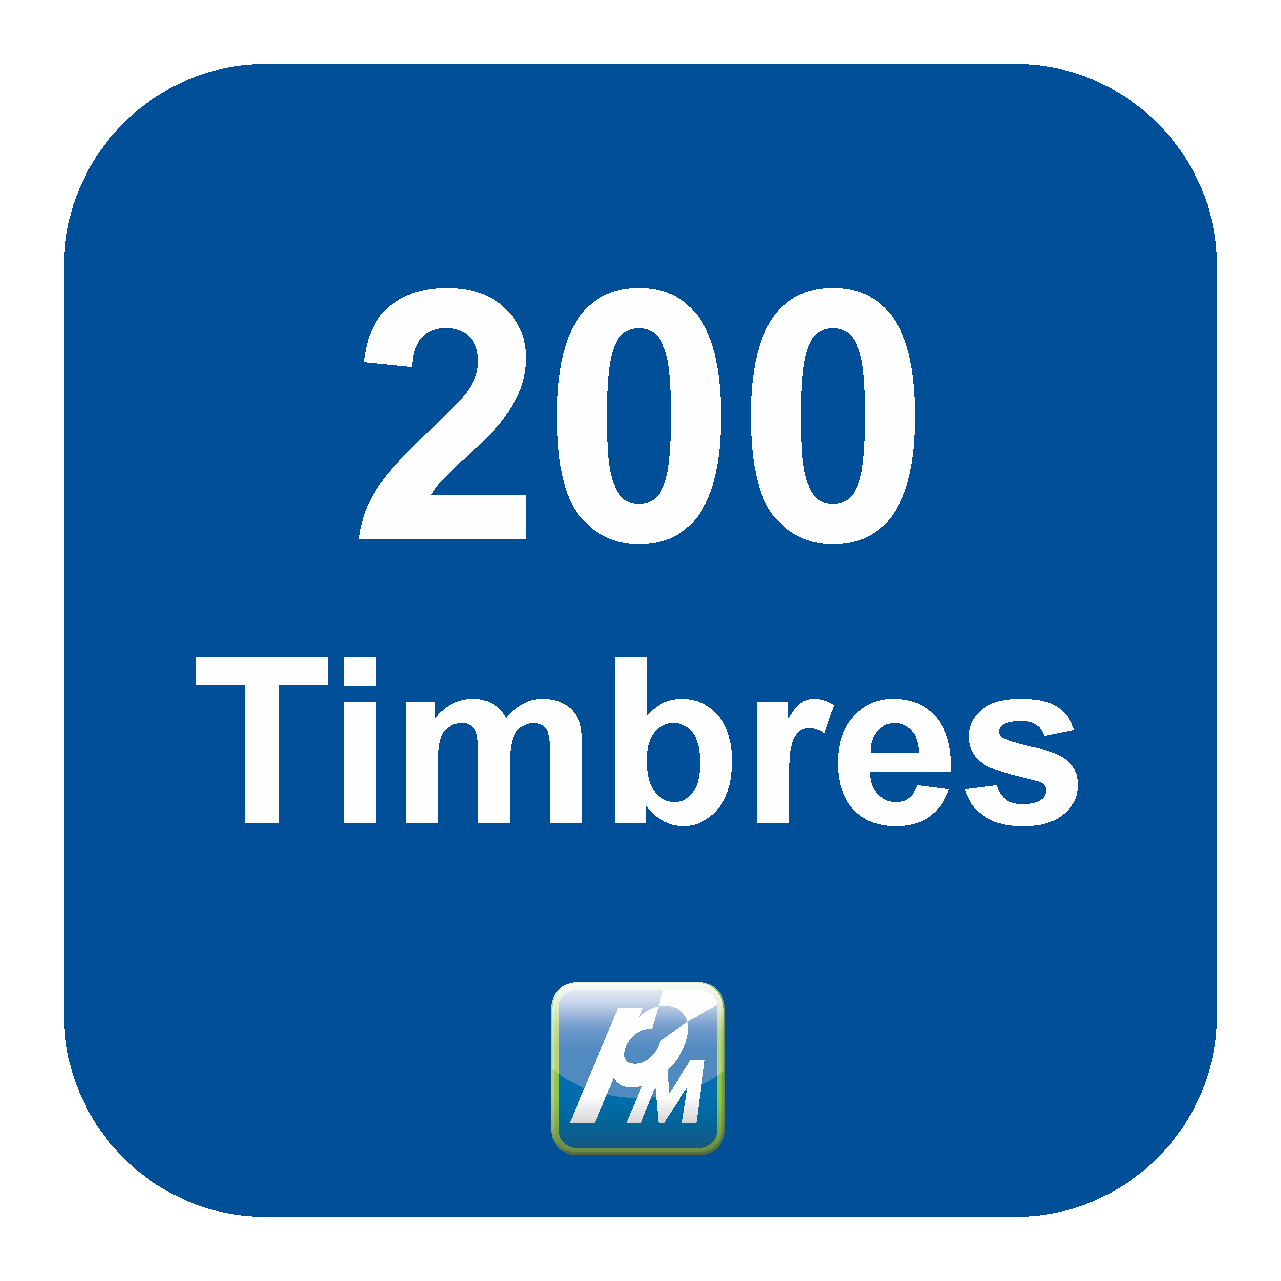 Aspel Timbres Fiscales - 200 Timbres - Aspel. Programas de México